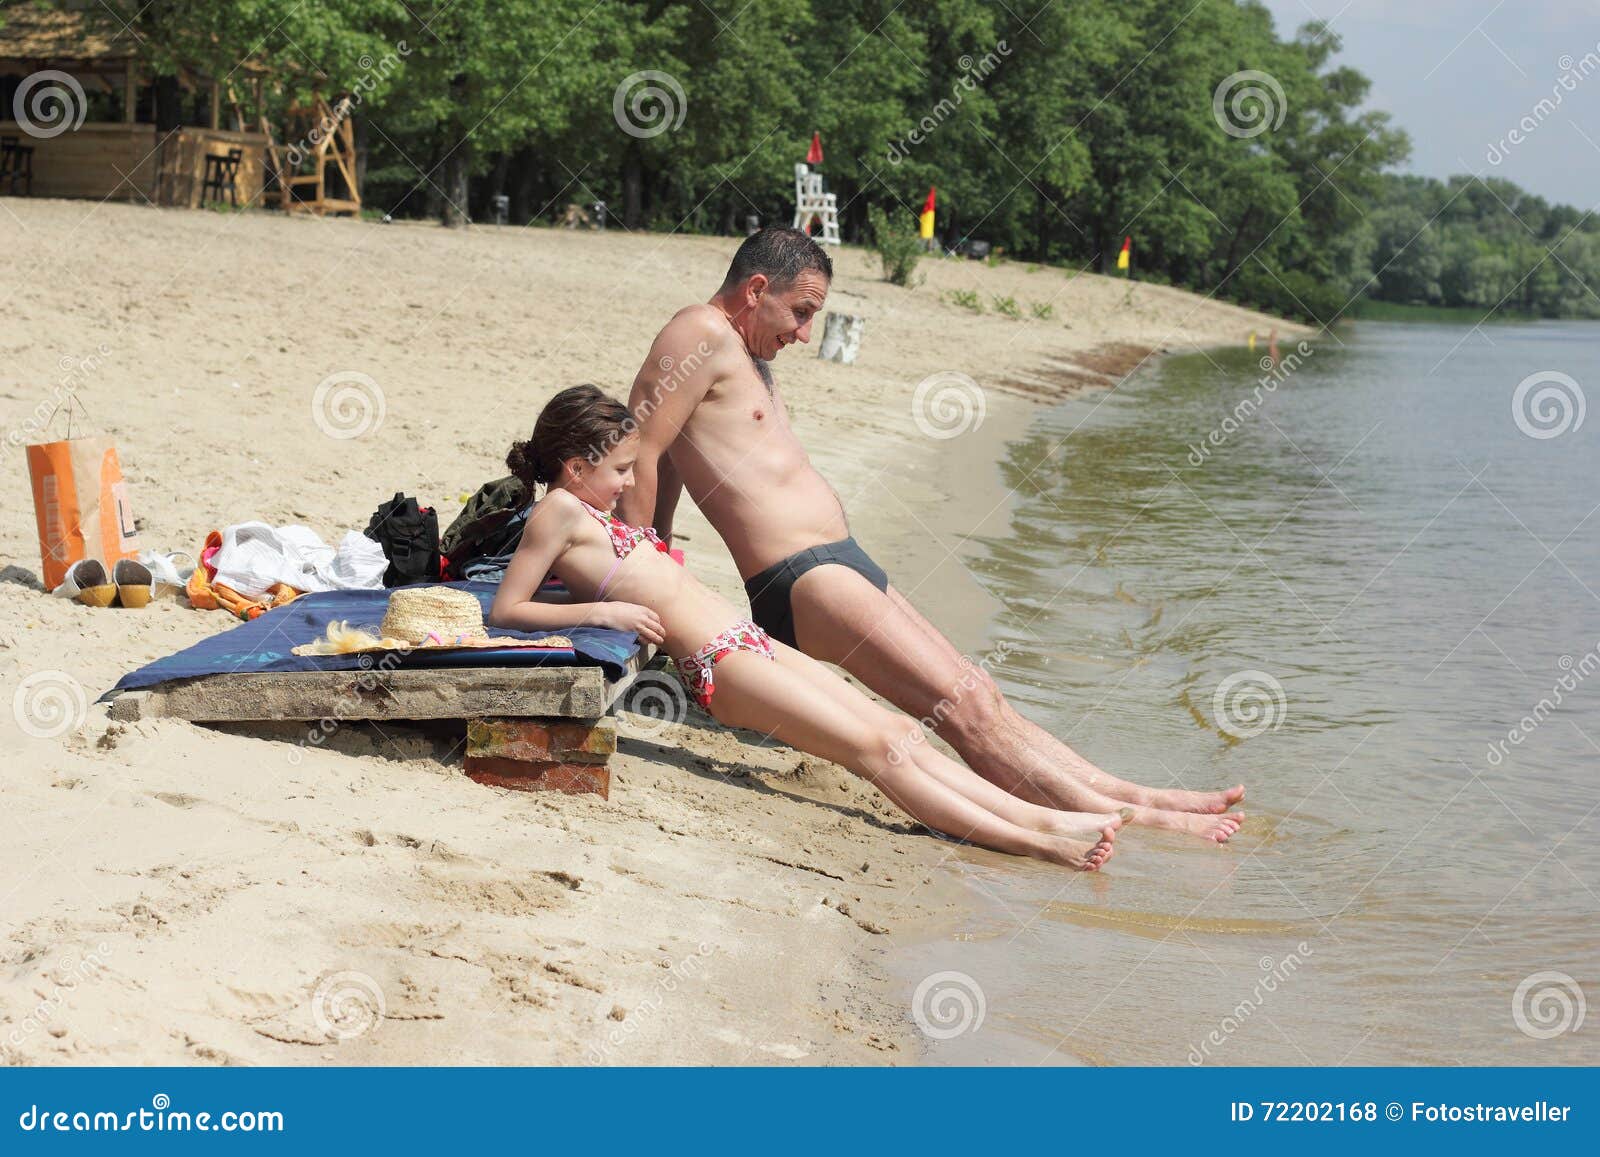 bintang permana recommends Nudist Family Vacation Pics